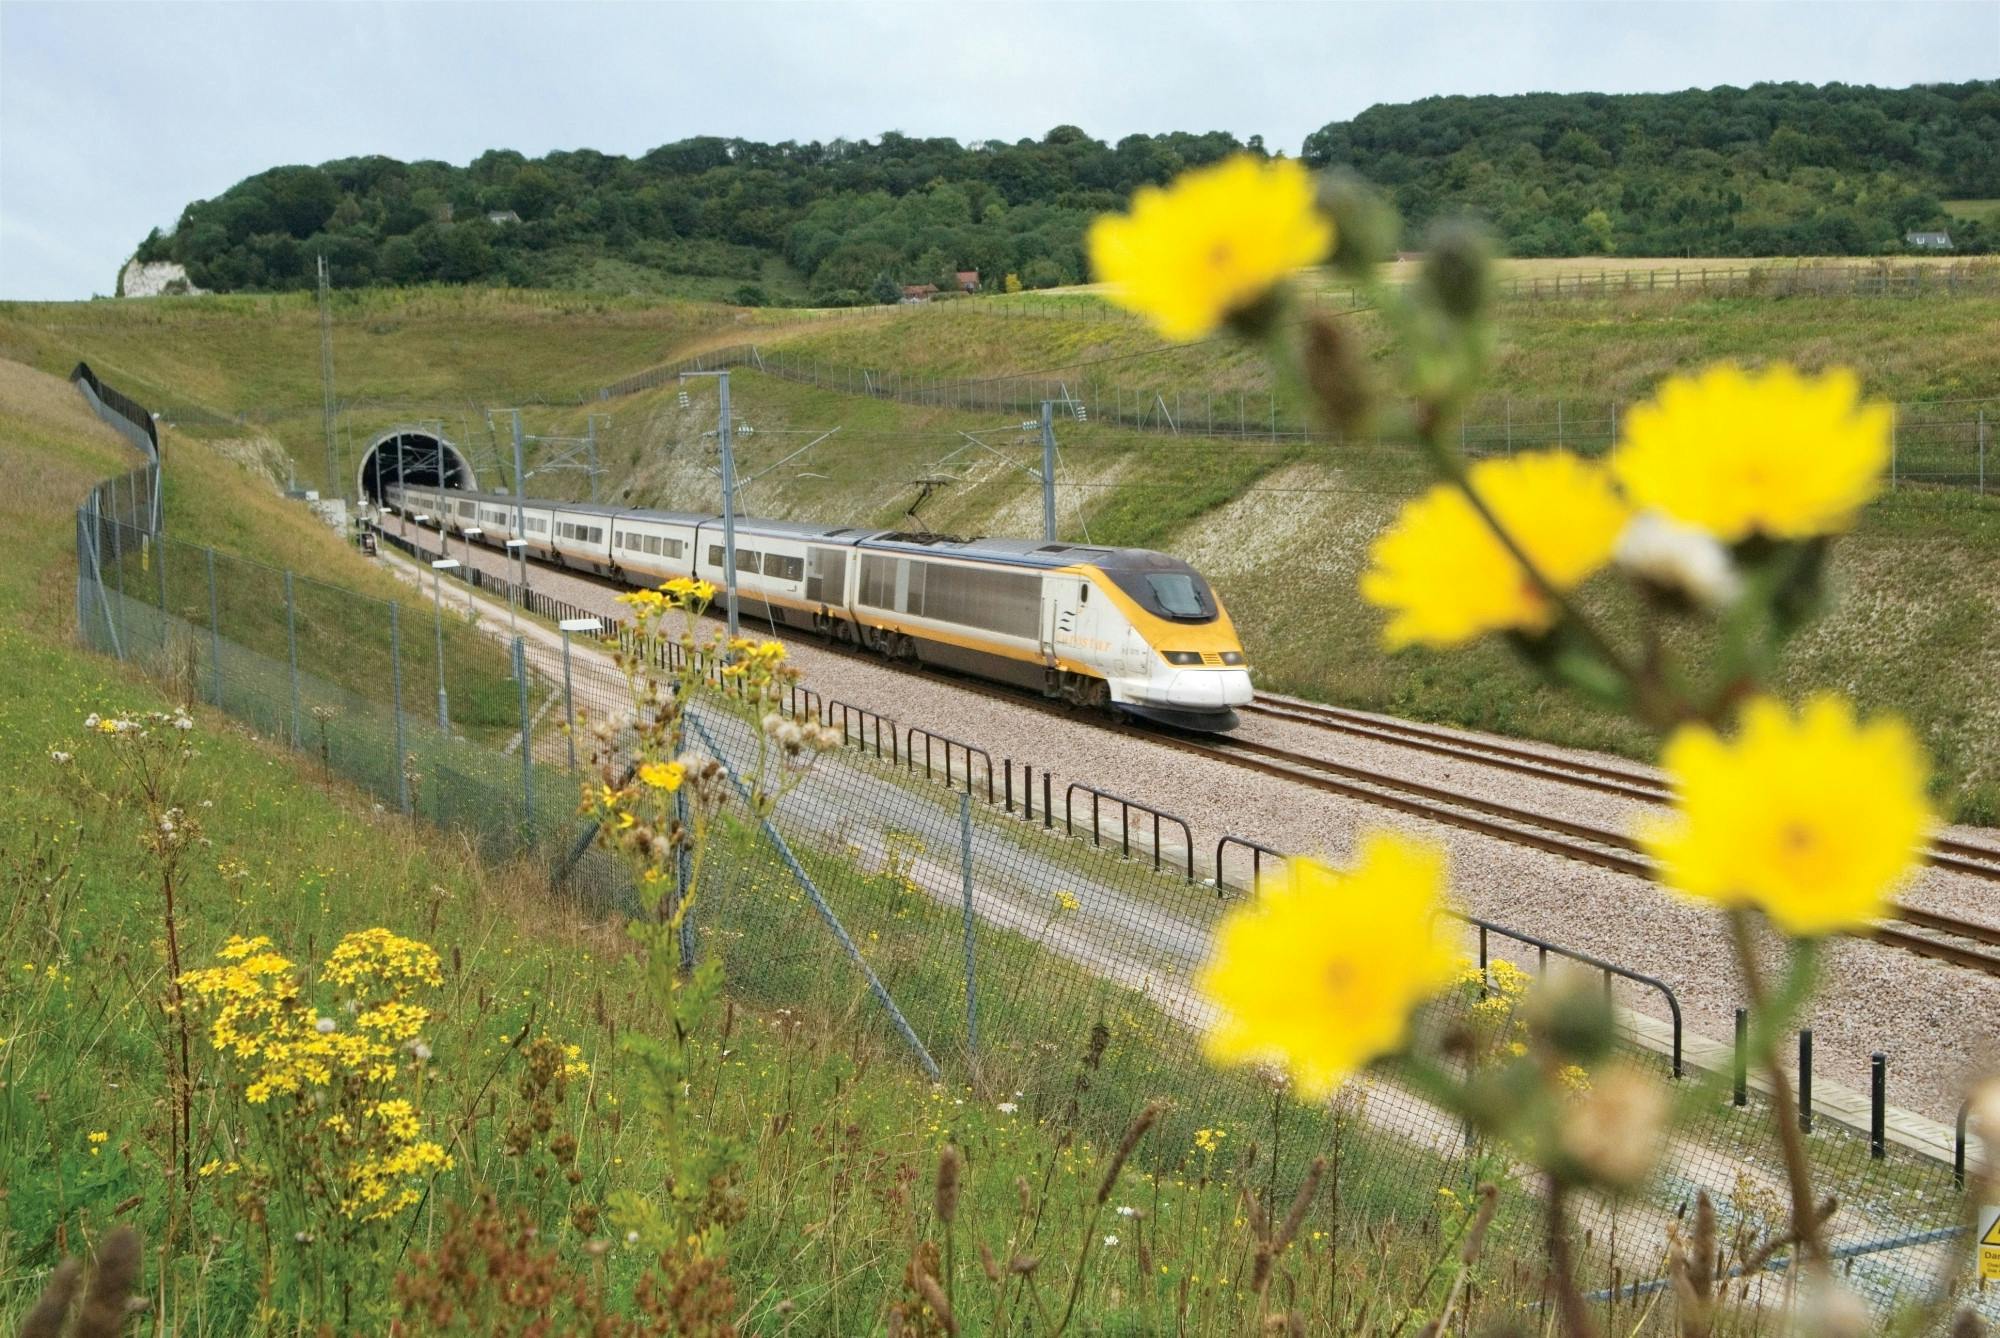 Eurostar_train_on_the_move_in_the_UK.jpg